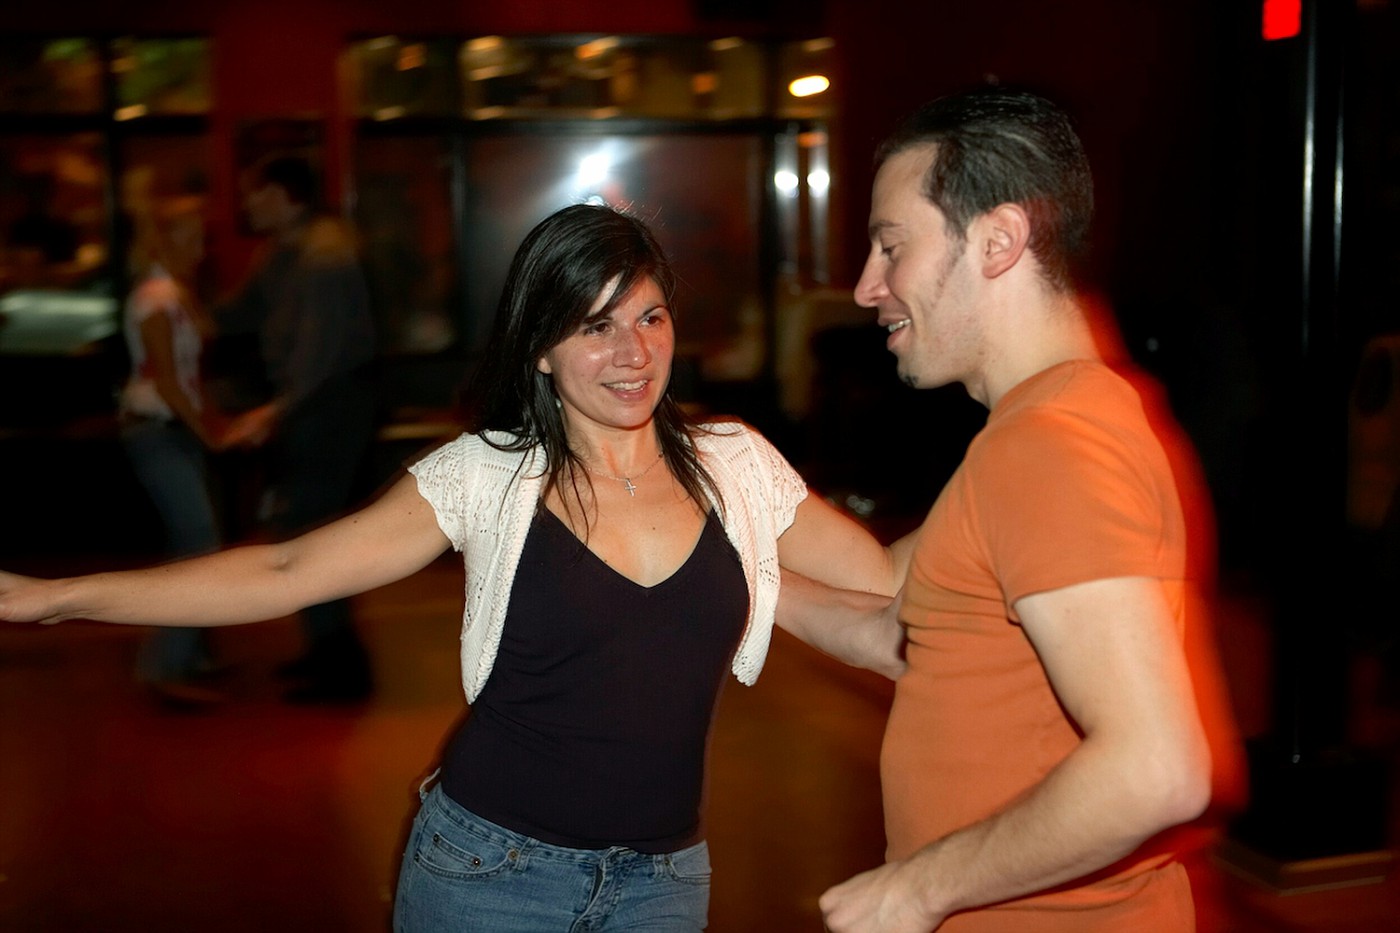 Kim Brolet dancing with Erik Novoa Oct 8, 2008